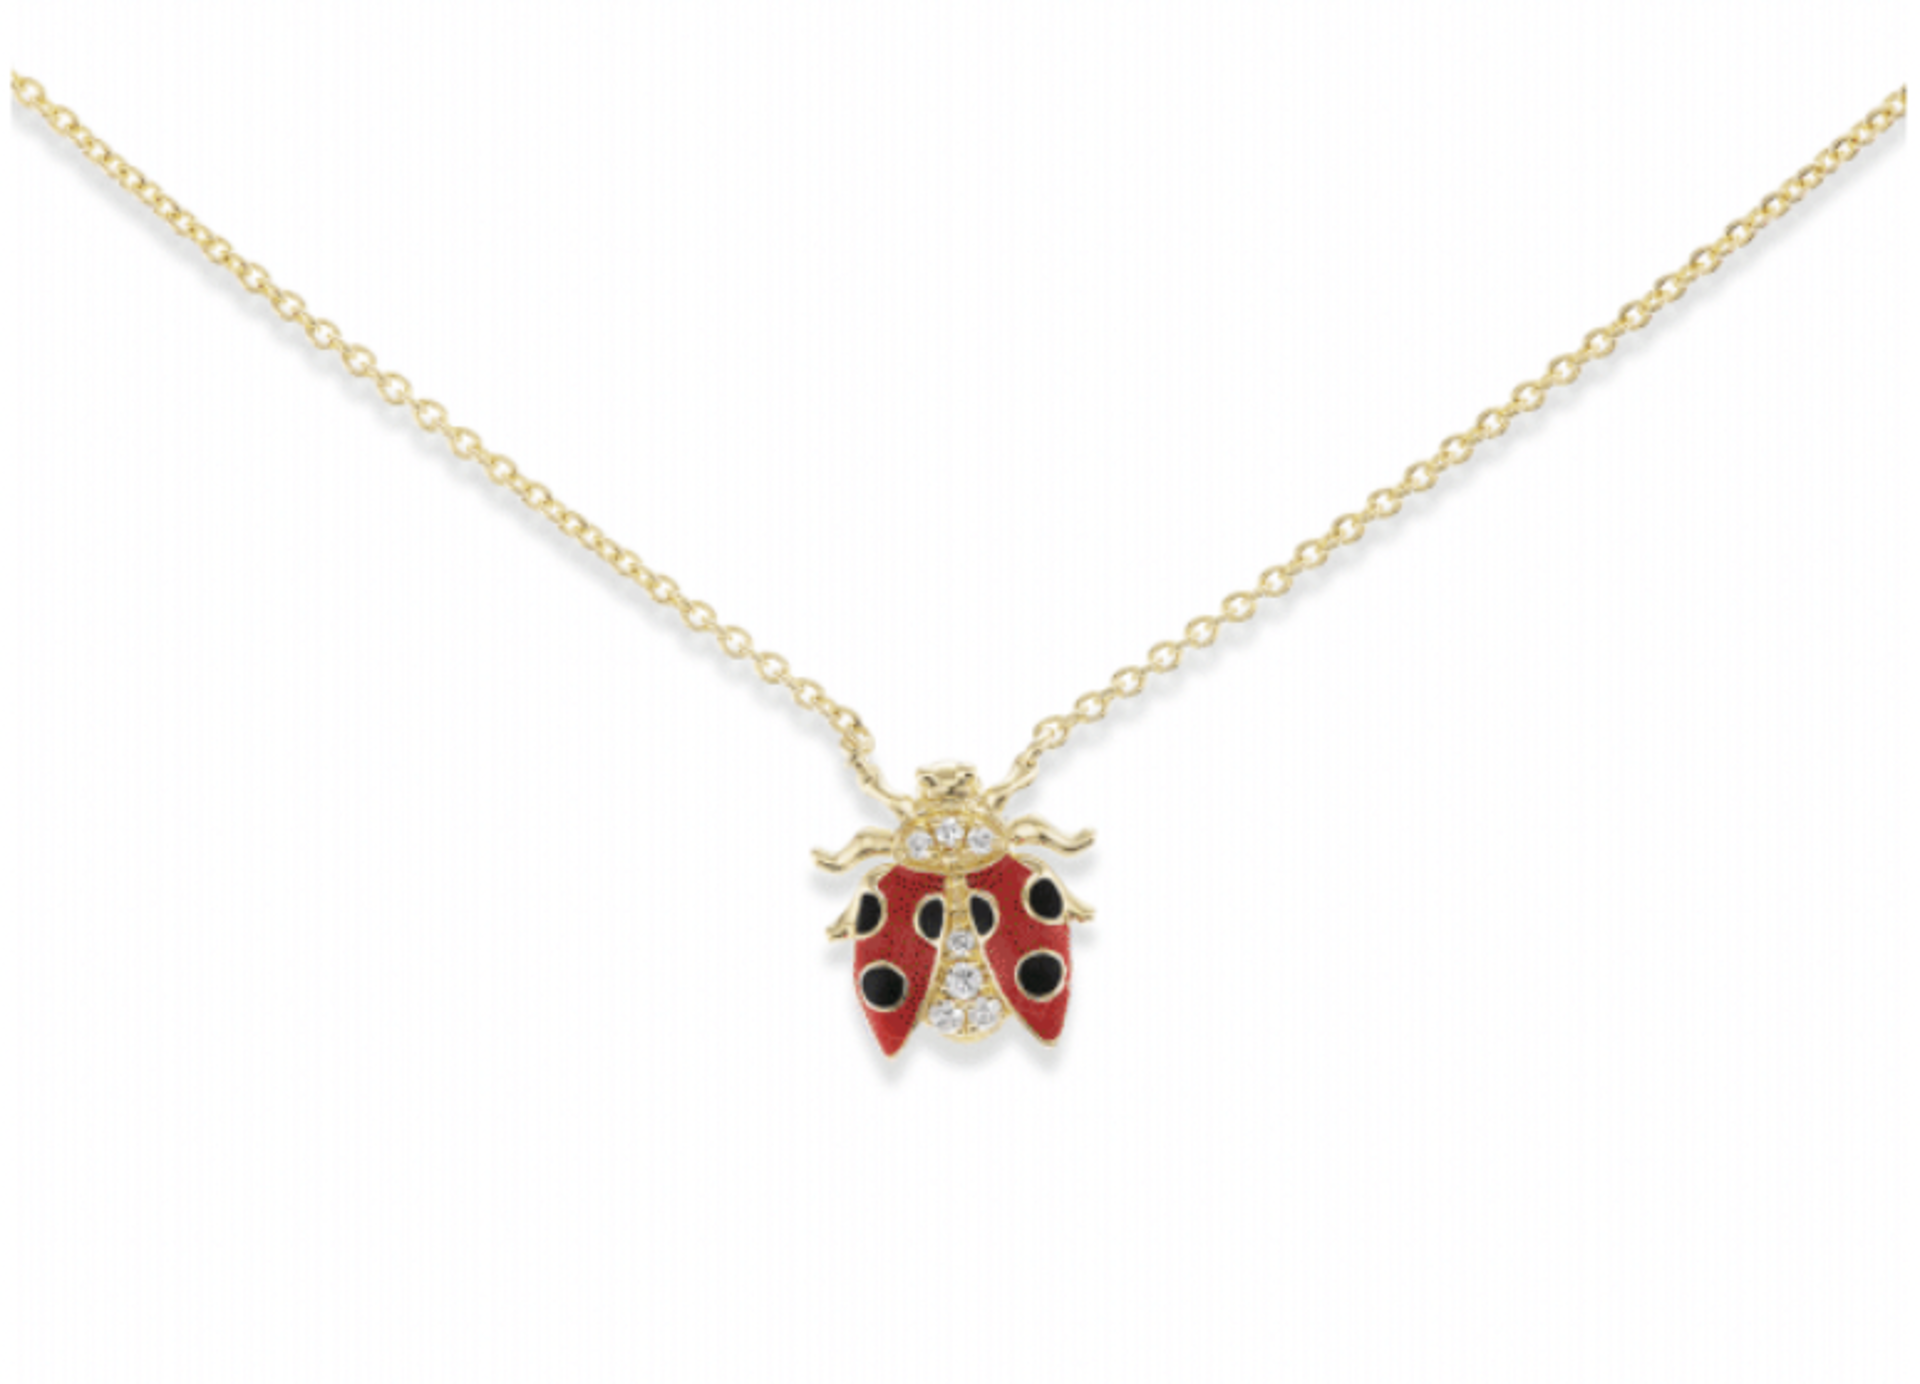 Ladybug Charm Necklace by Ana Katarina